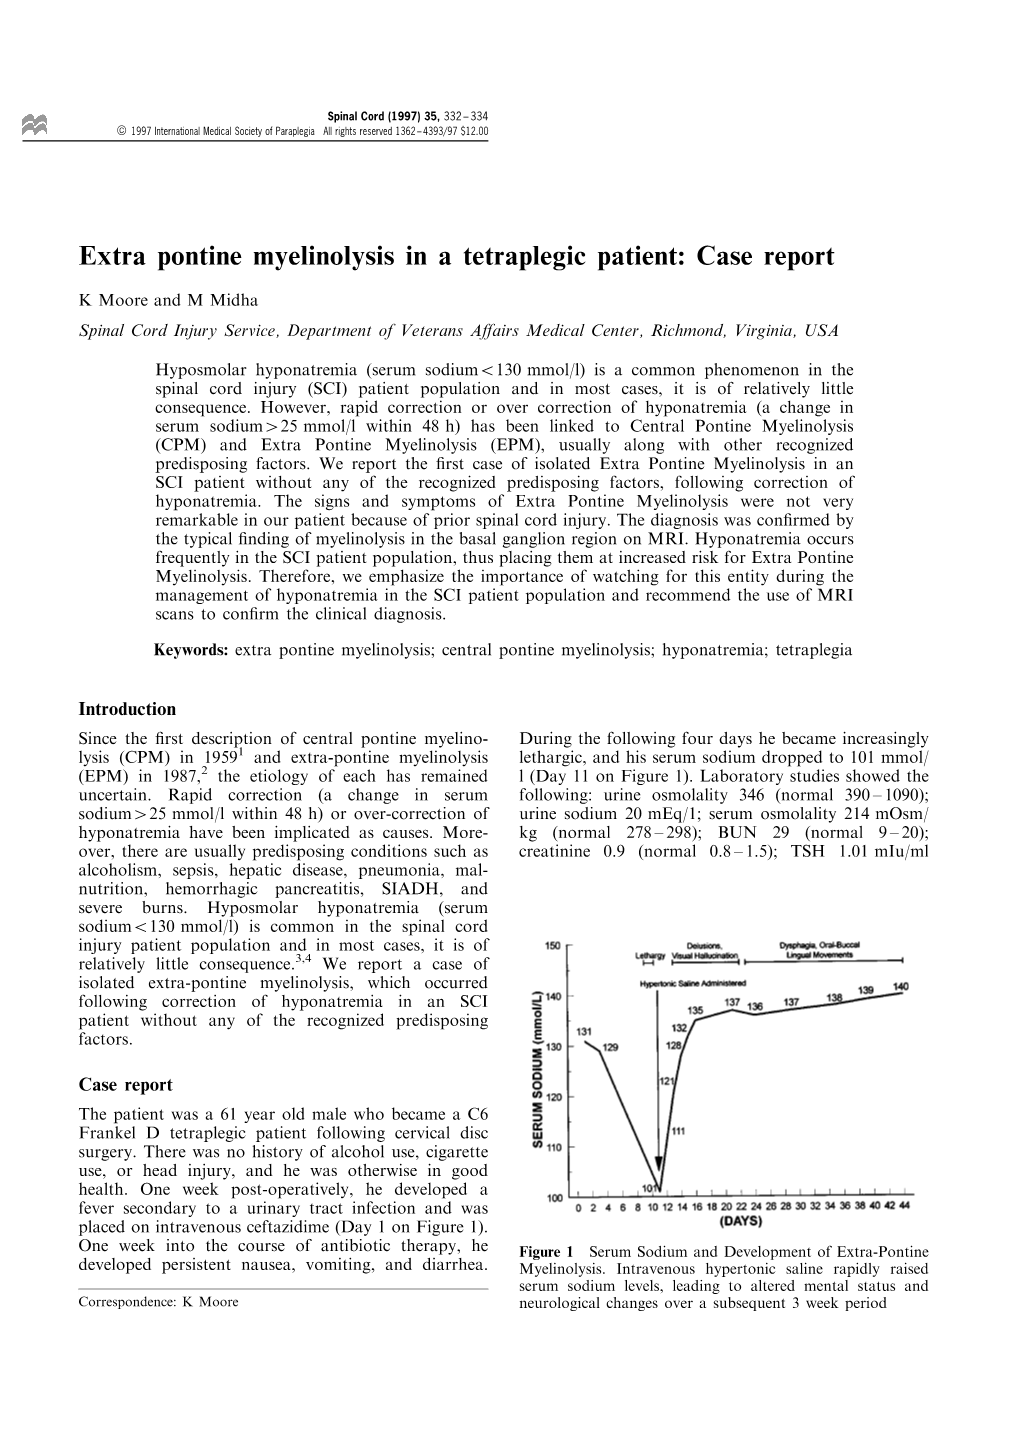 Extra Pontine Myelinolysis in a Tetraplegic Patient: Case Report